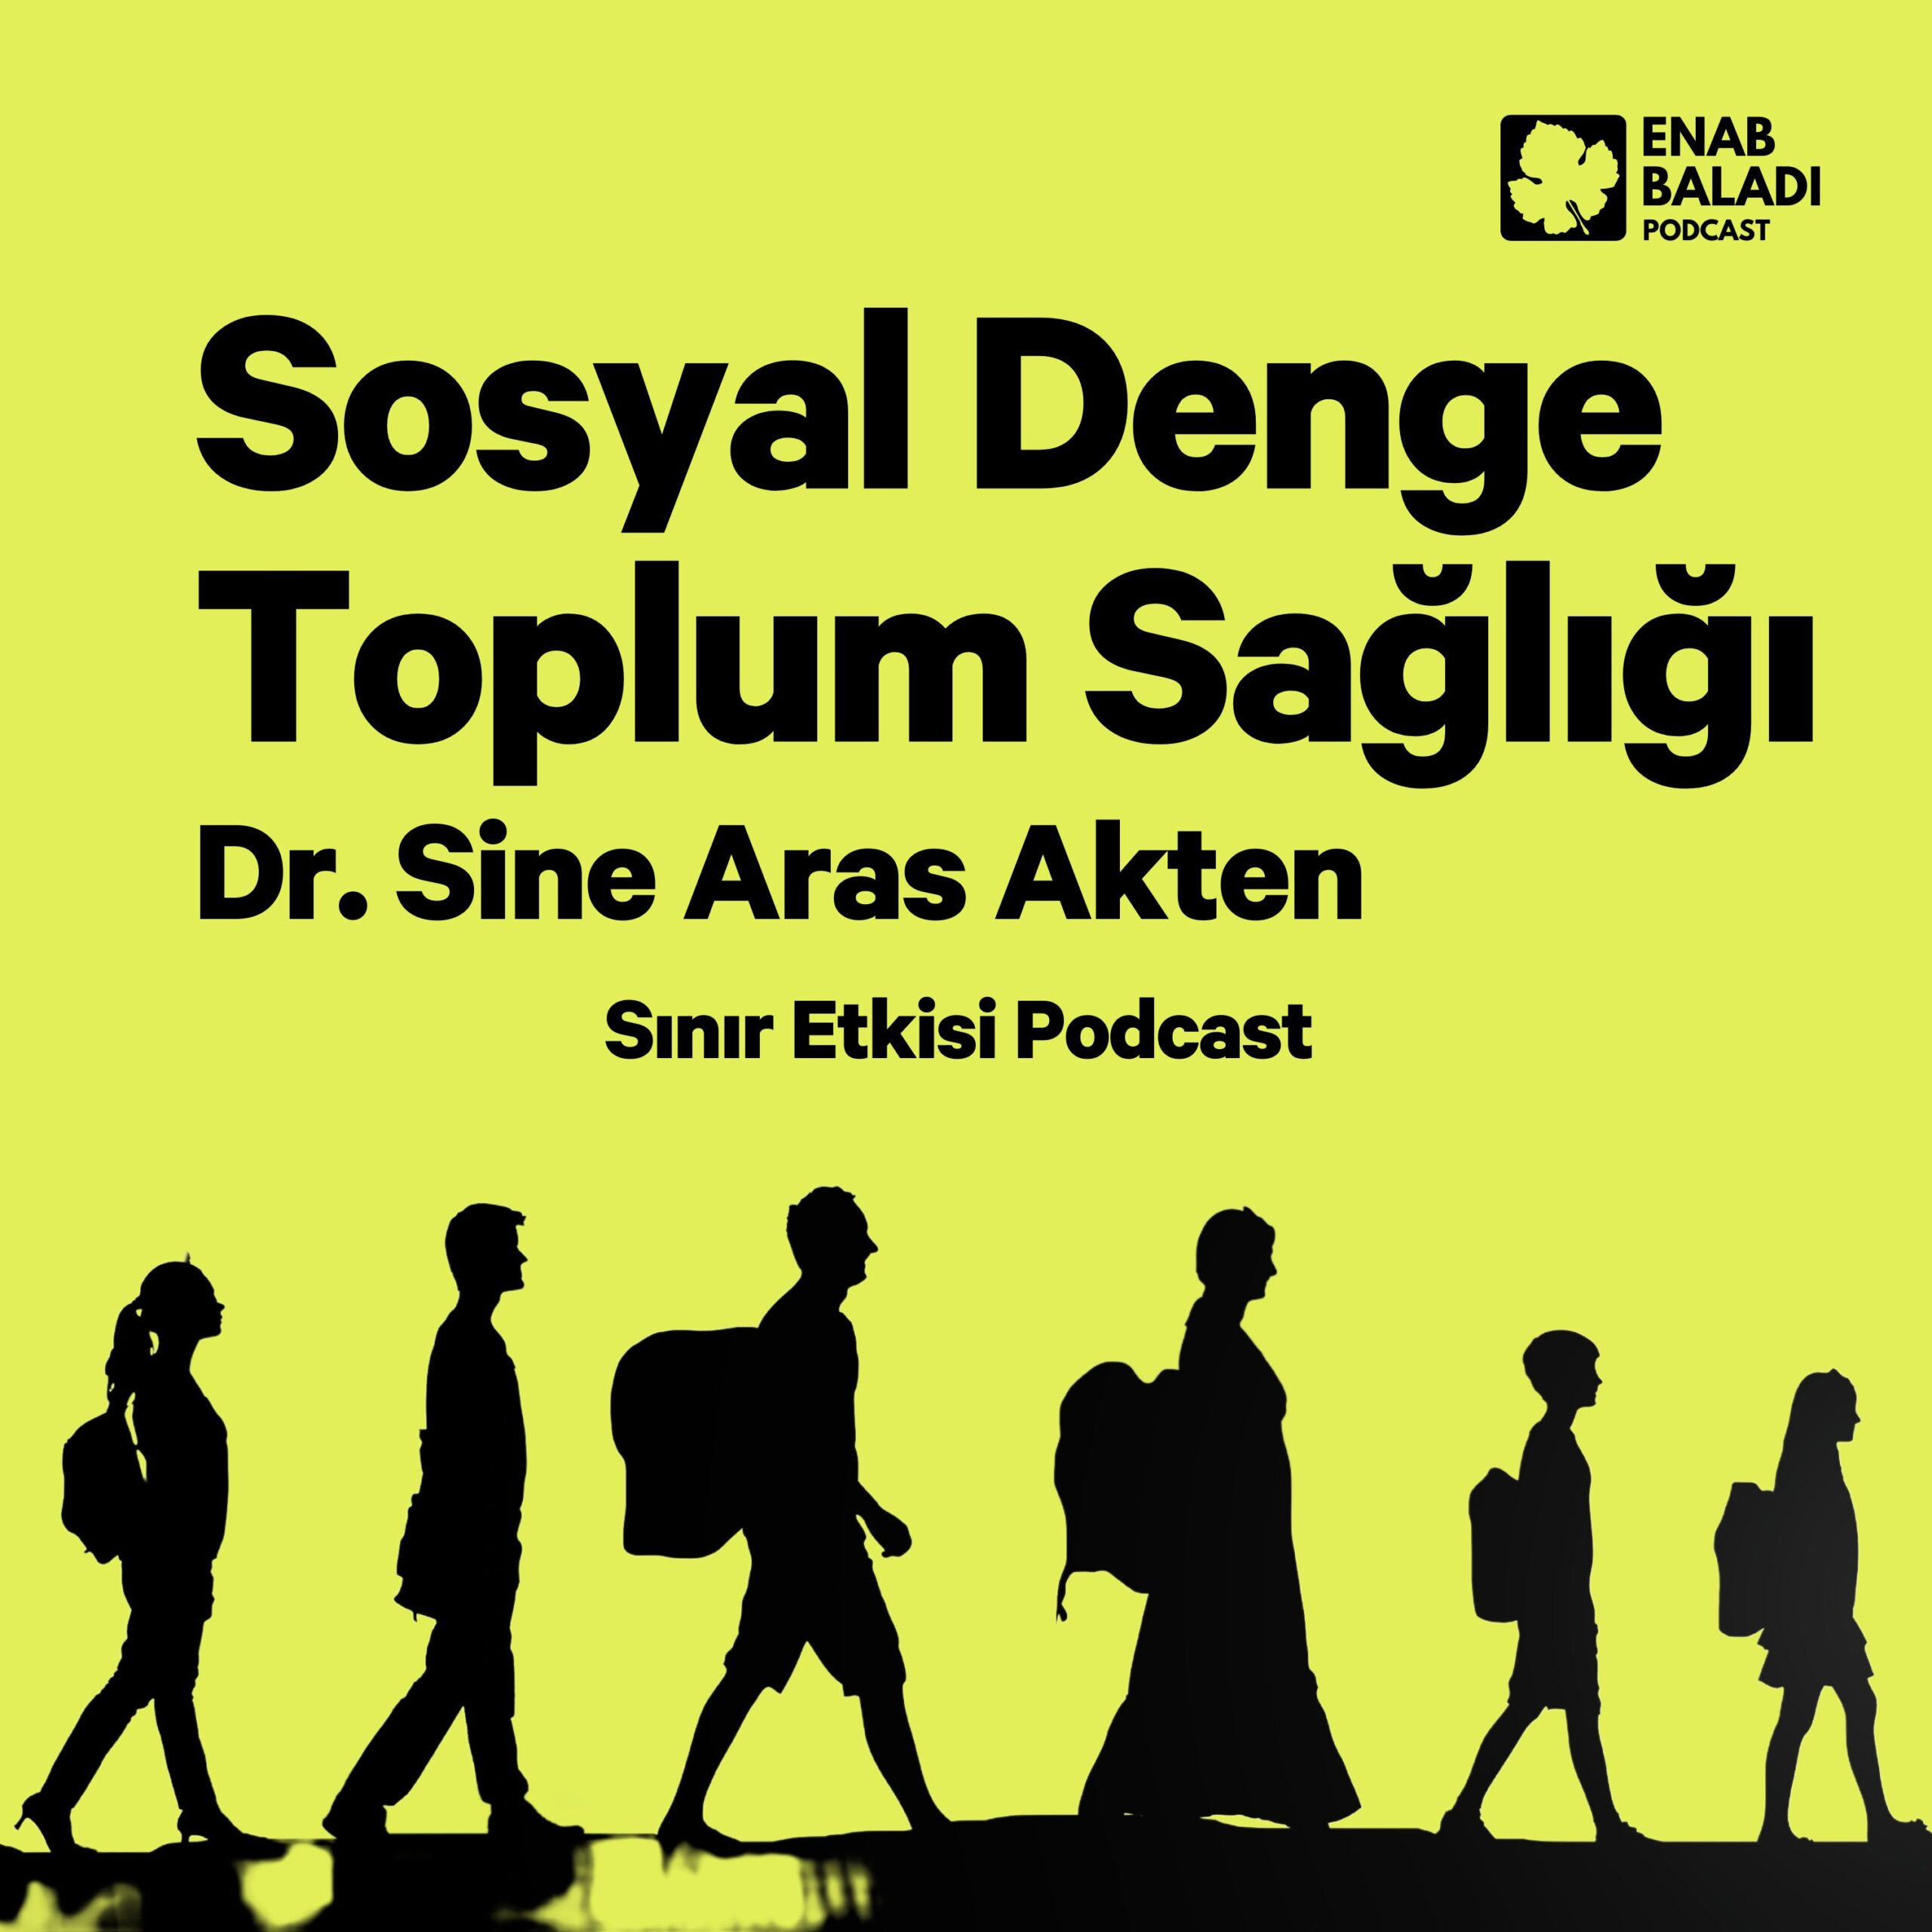 Sosyal Denge Toplum Sağlığı Dr. Sine Aras Akten